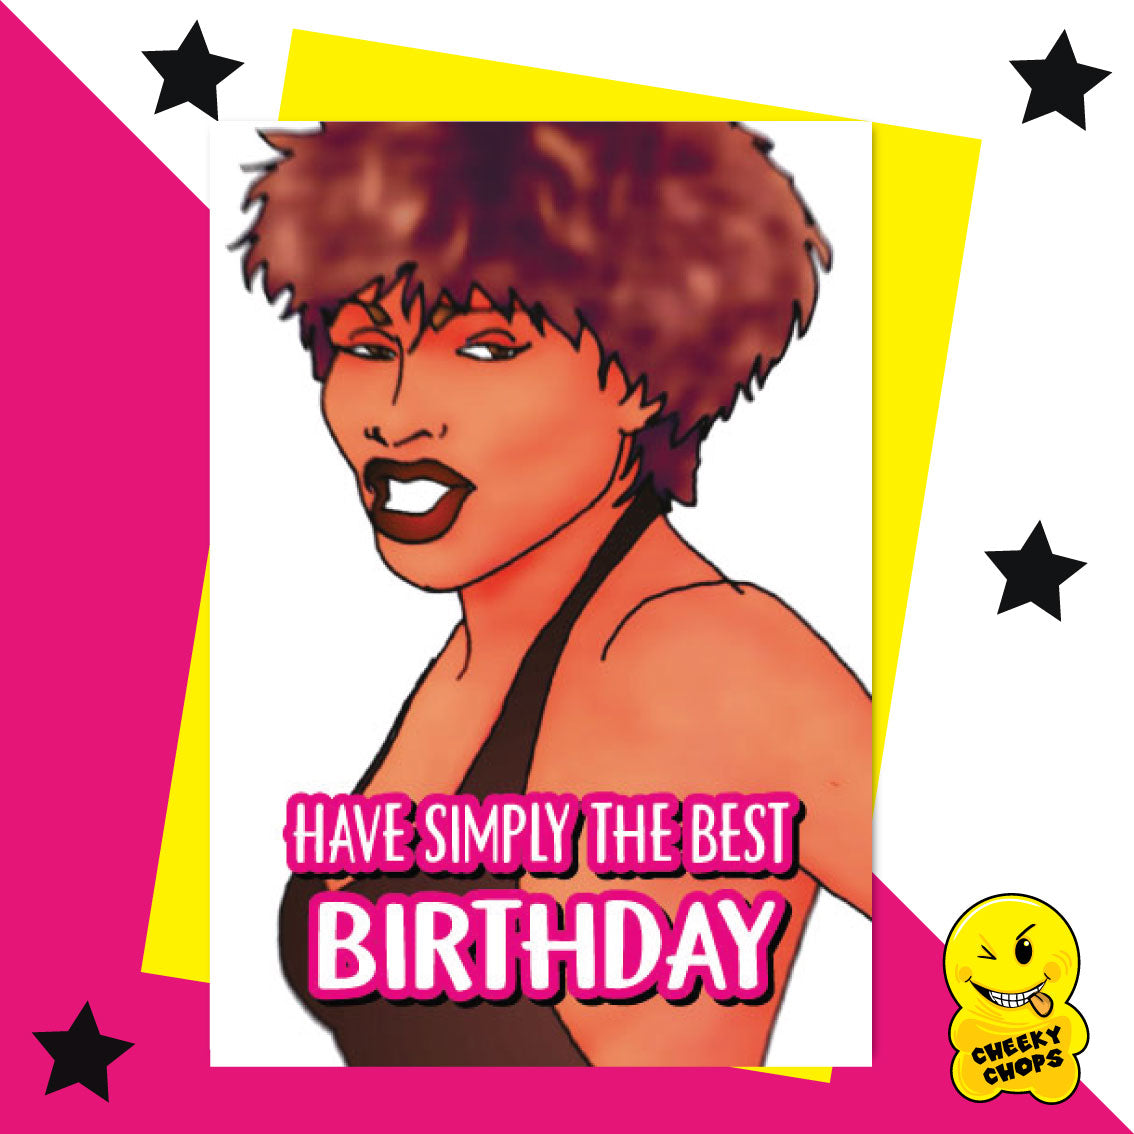 Tina Turner Simply The Best Birthday Card